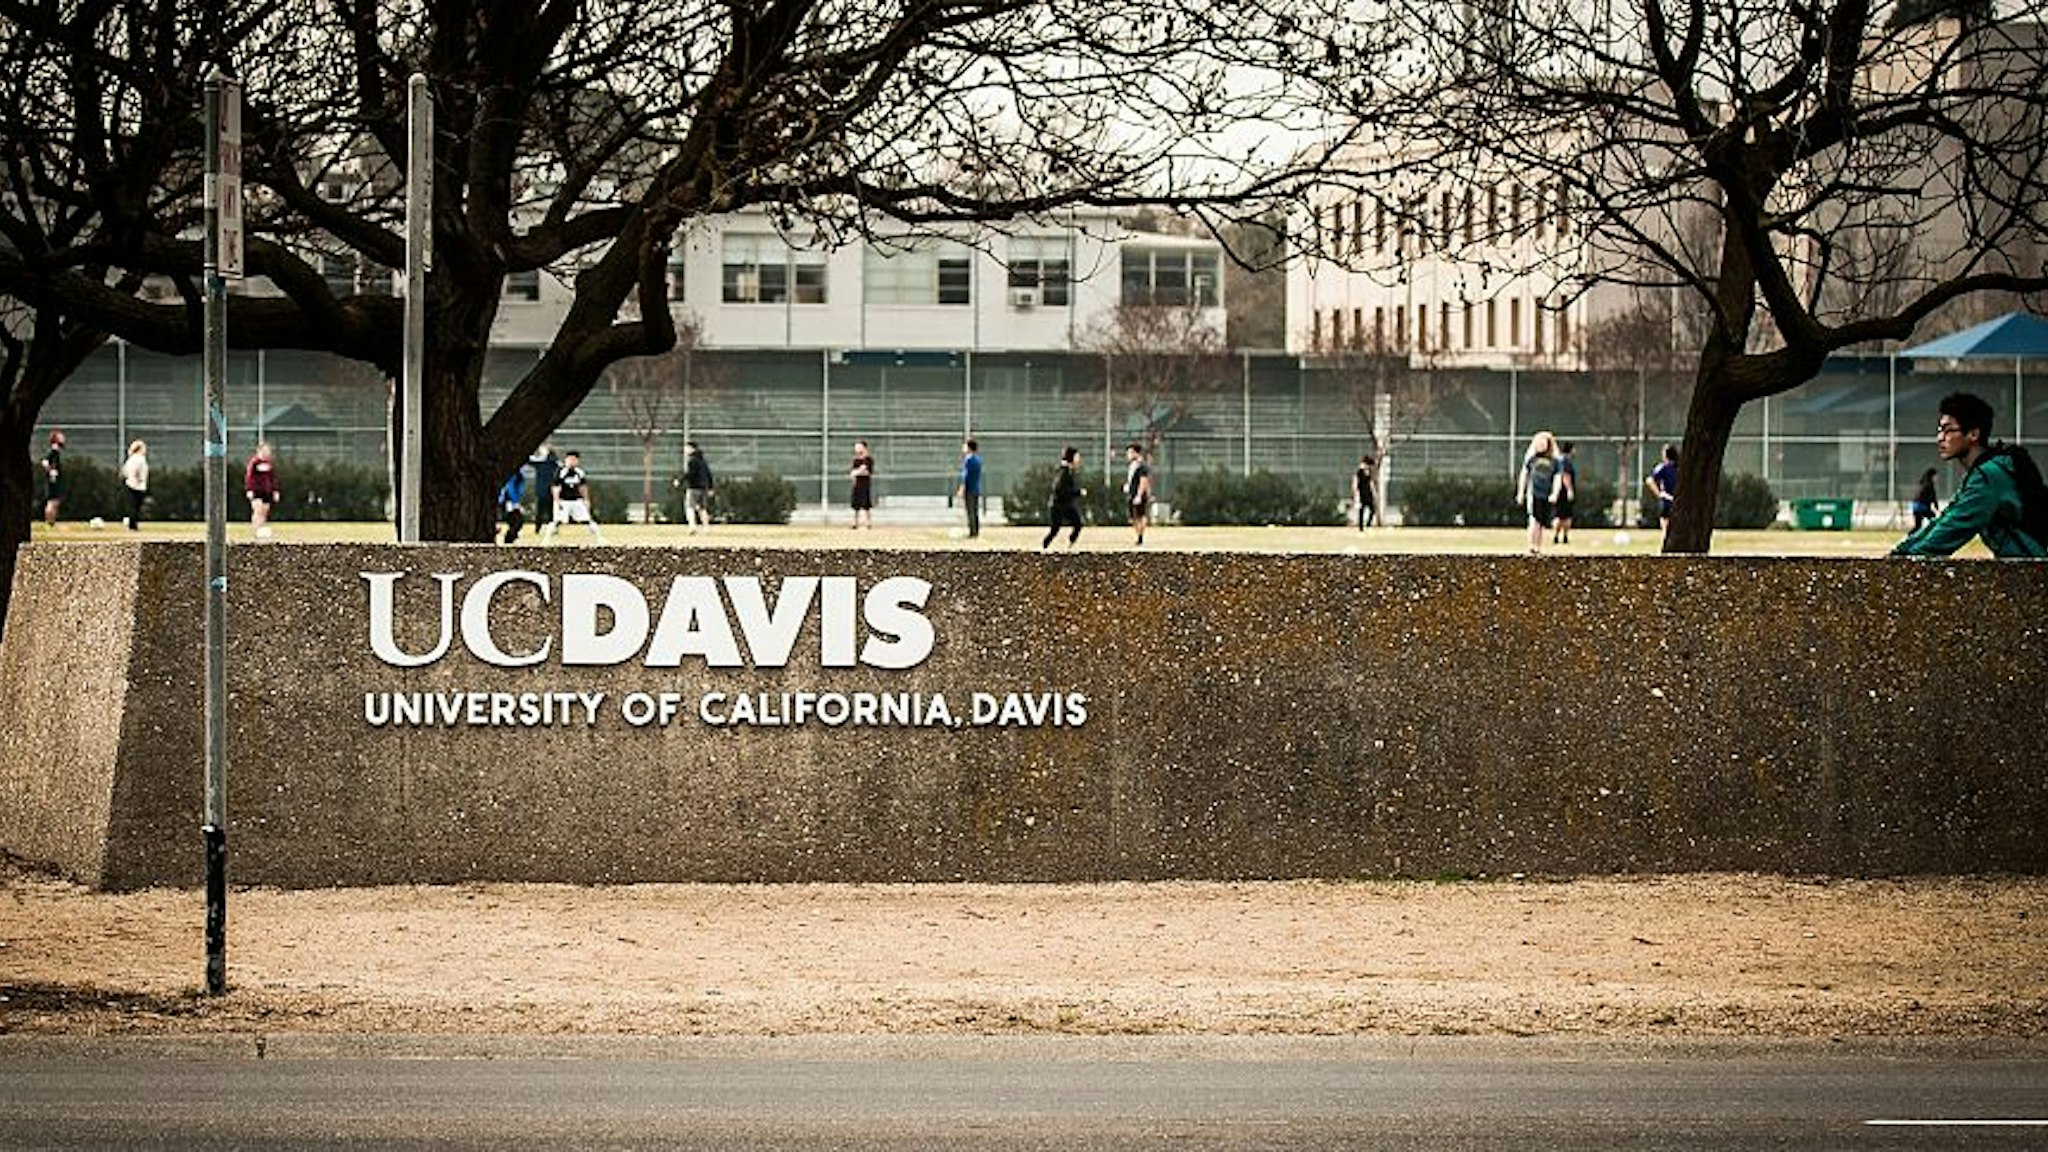 University of California at Davis. Davis, California. Taken February 2, 2015.